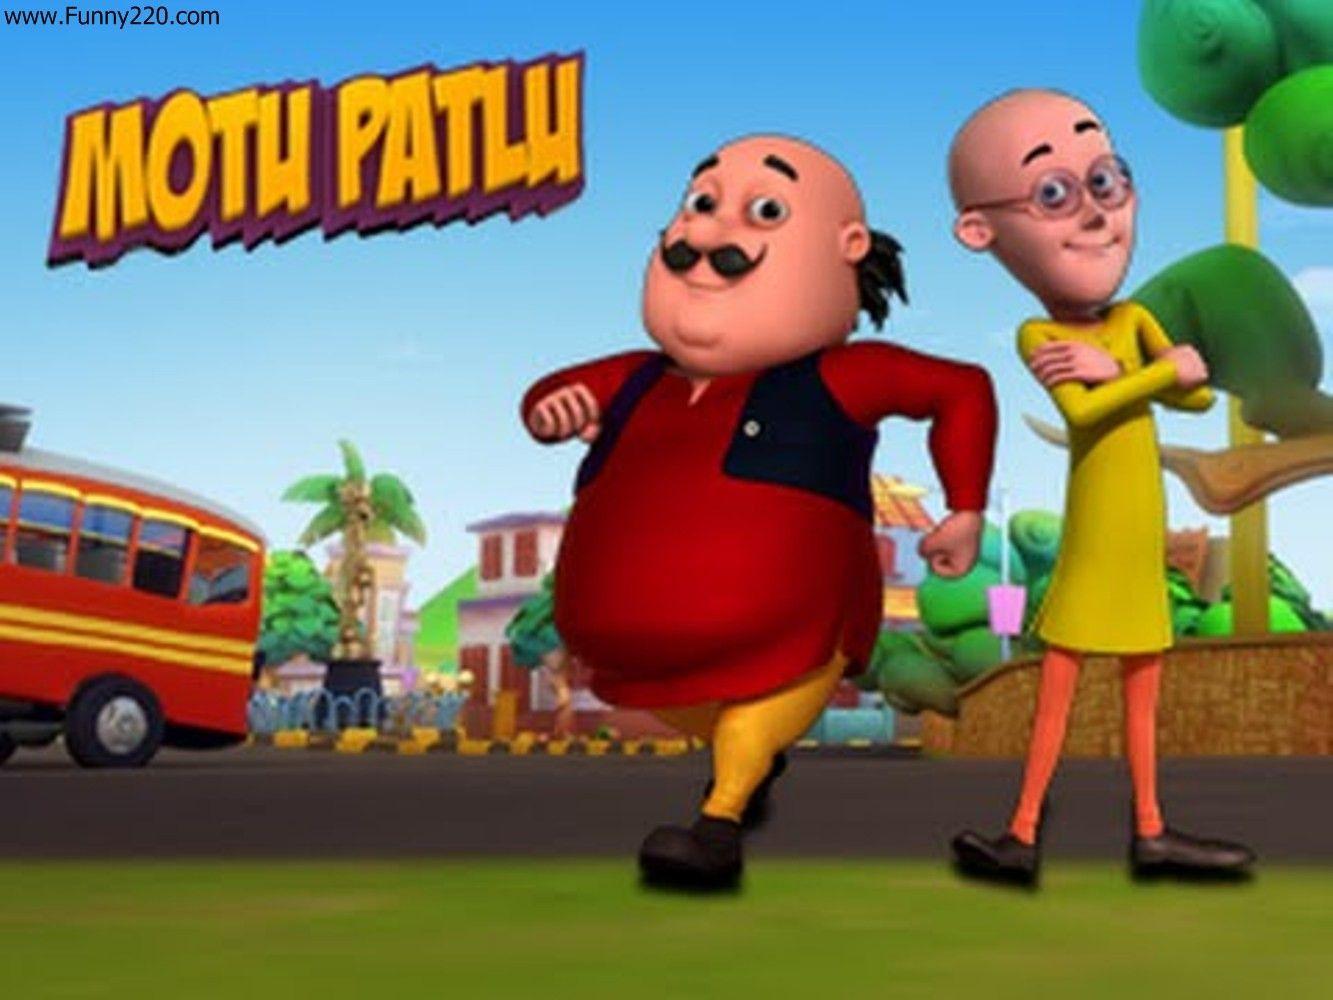 Letest Motu Patalu HD wallpaper, Get free high definition cartoon